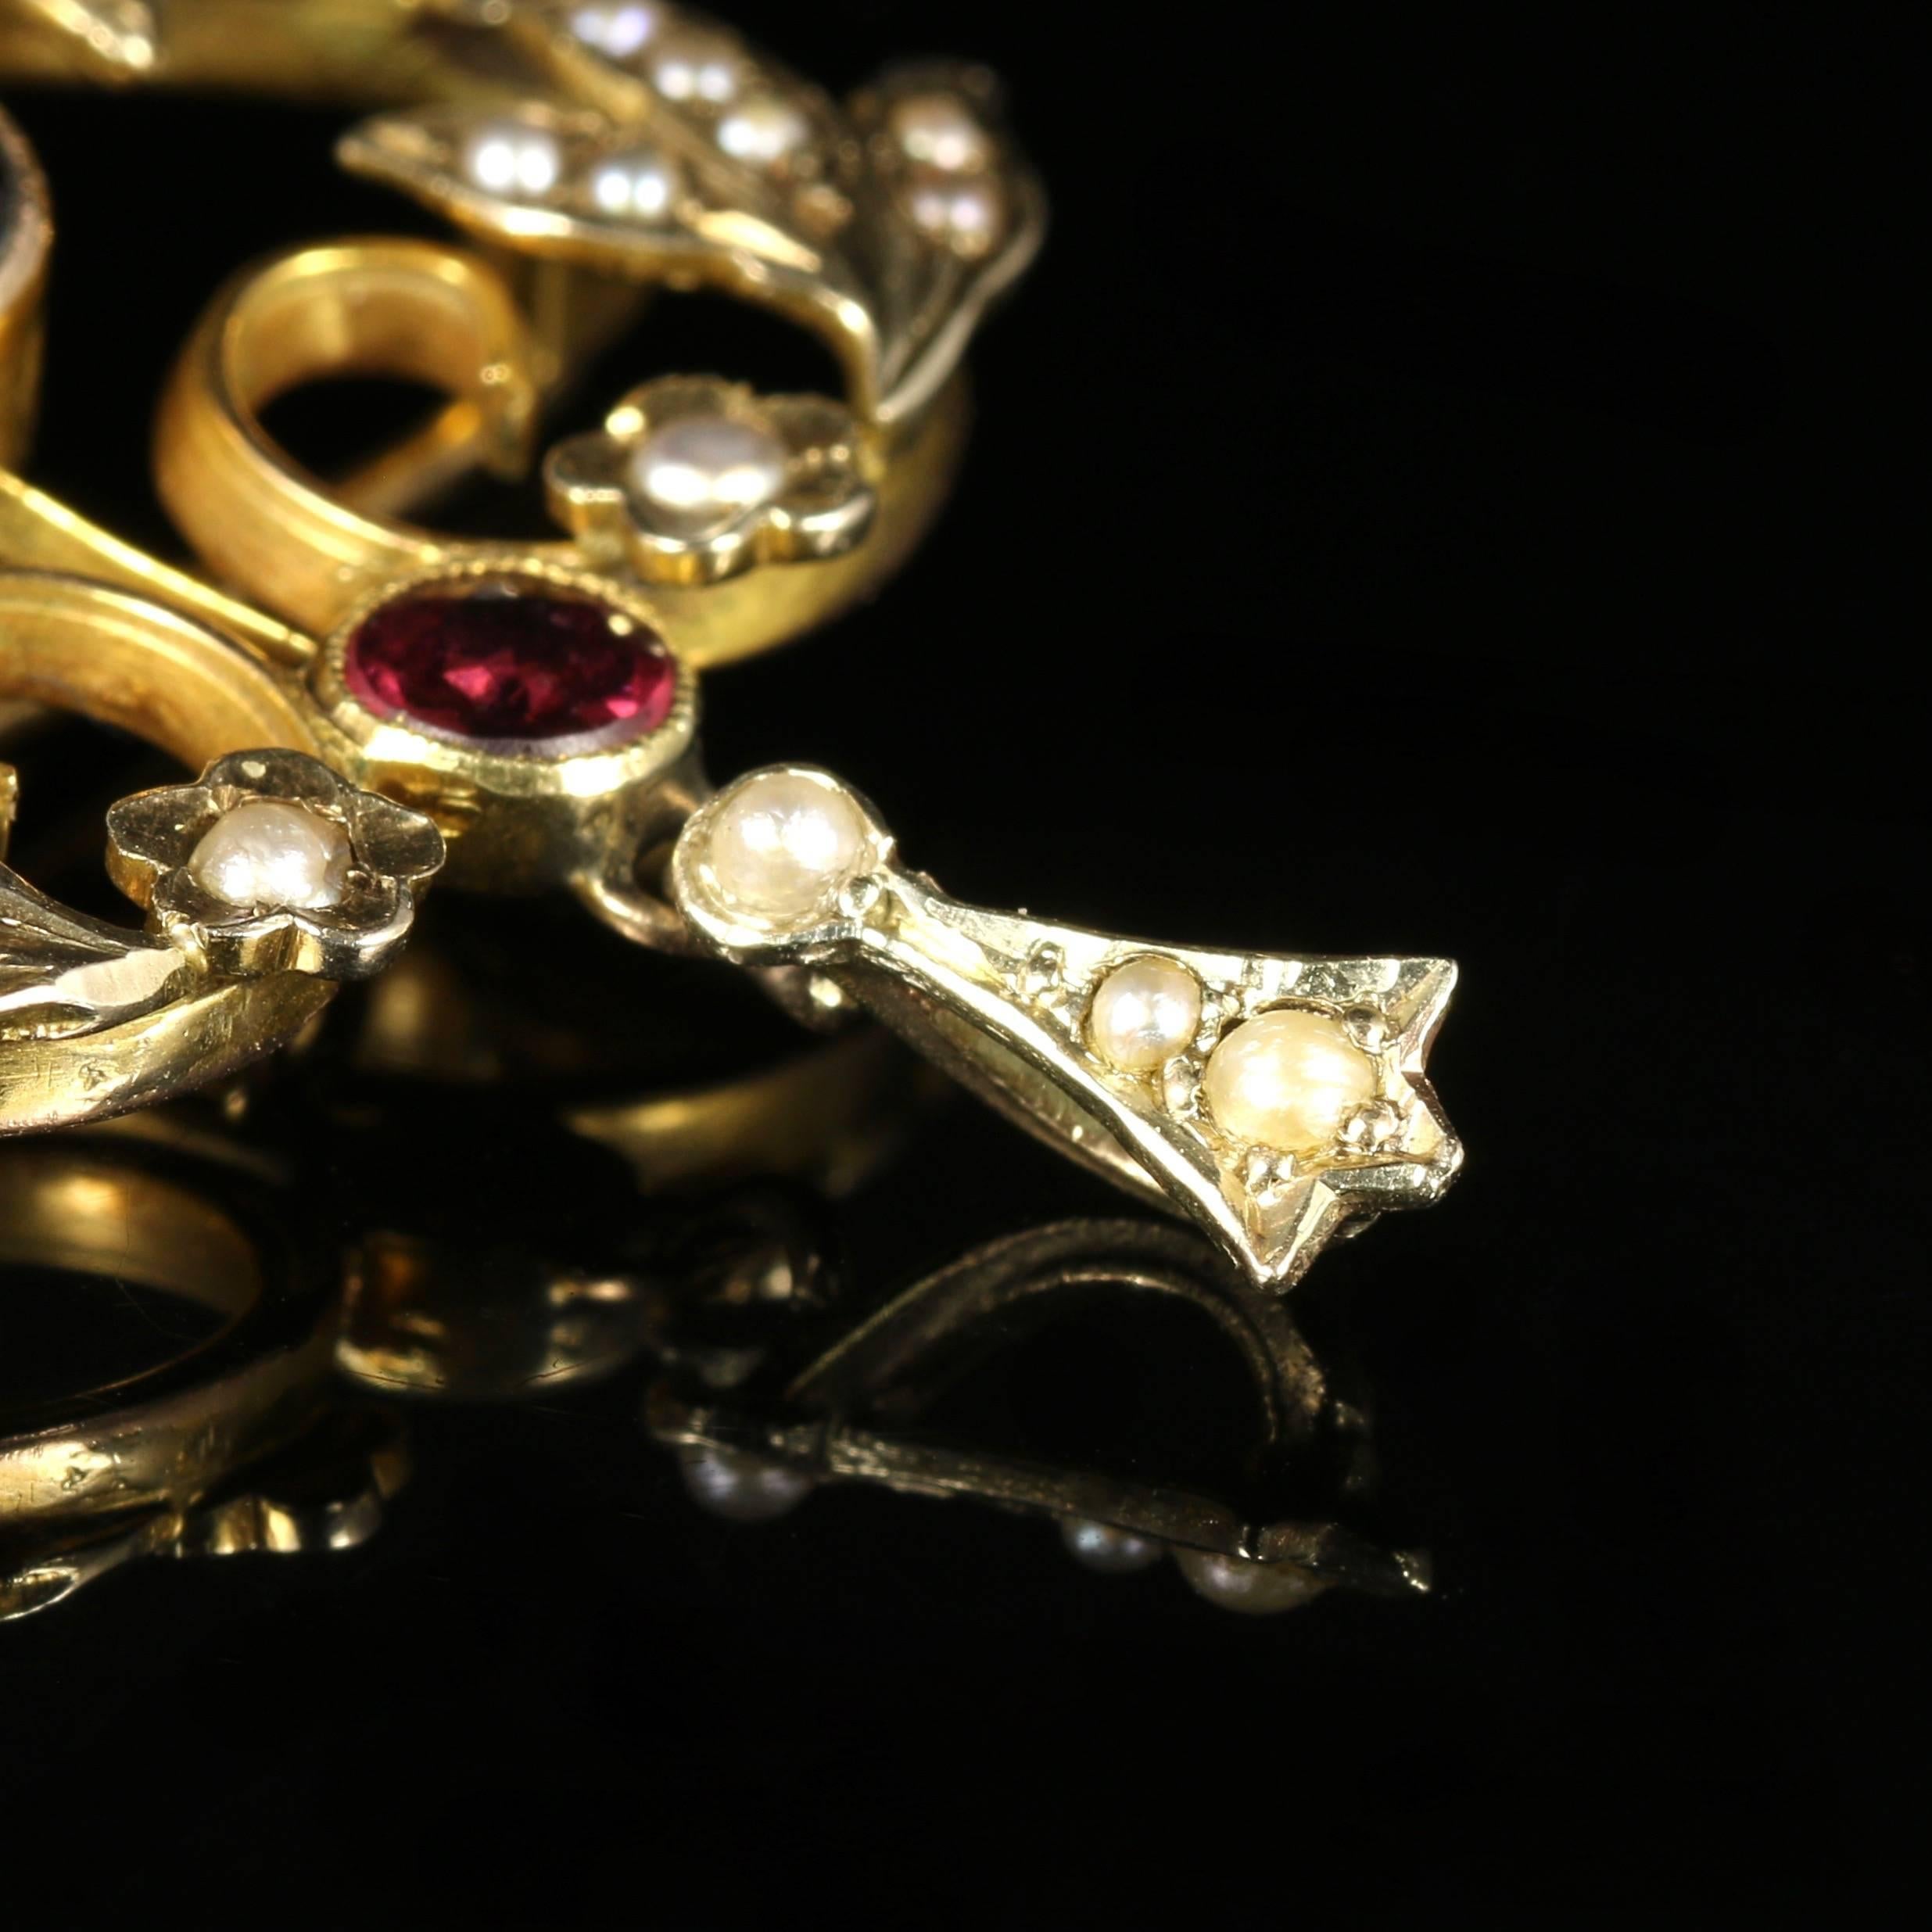 Antique Victorian Almandine Garnet Pearl 15 Carat Gold Pendant Brooch For Sale 4